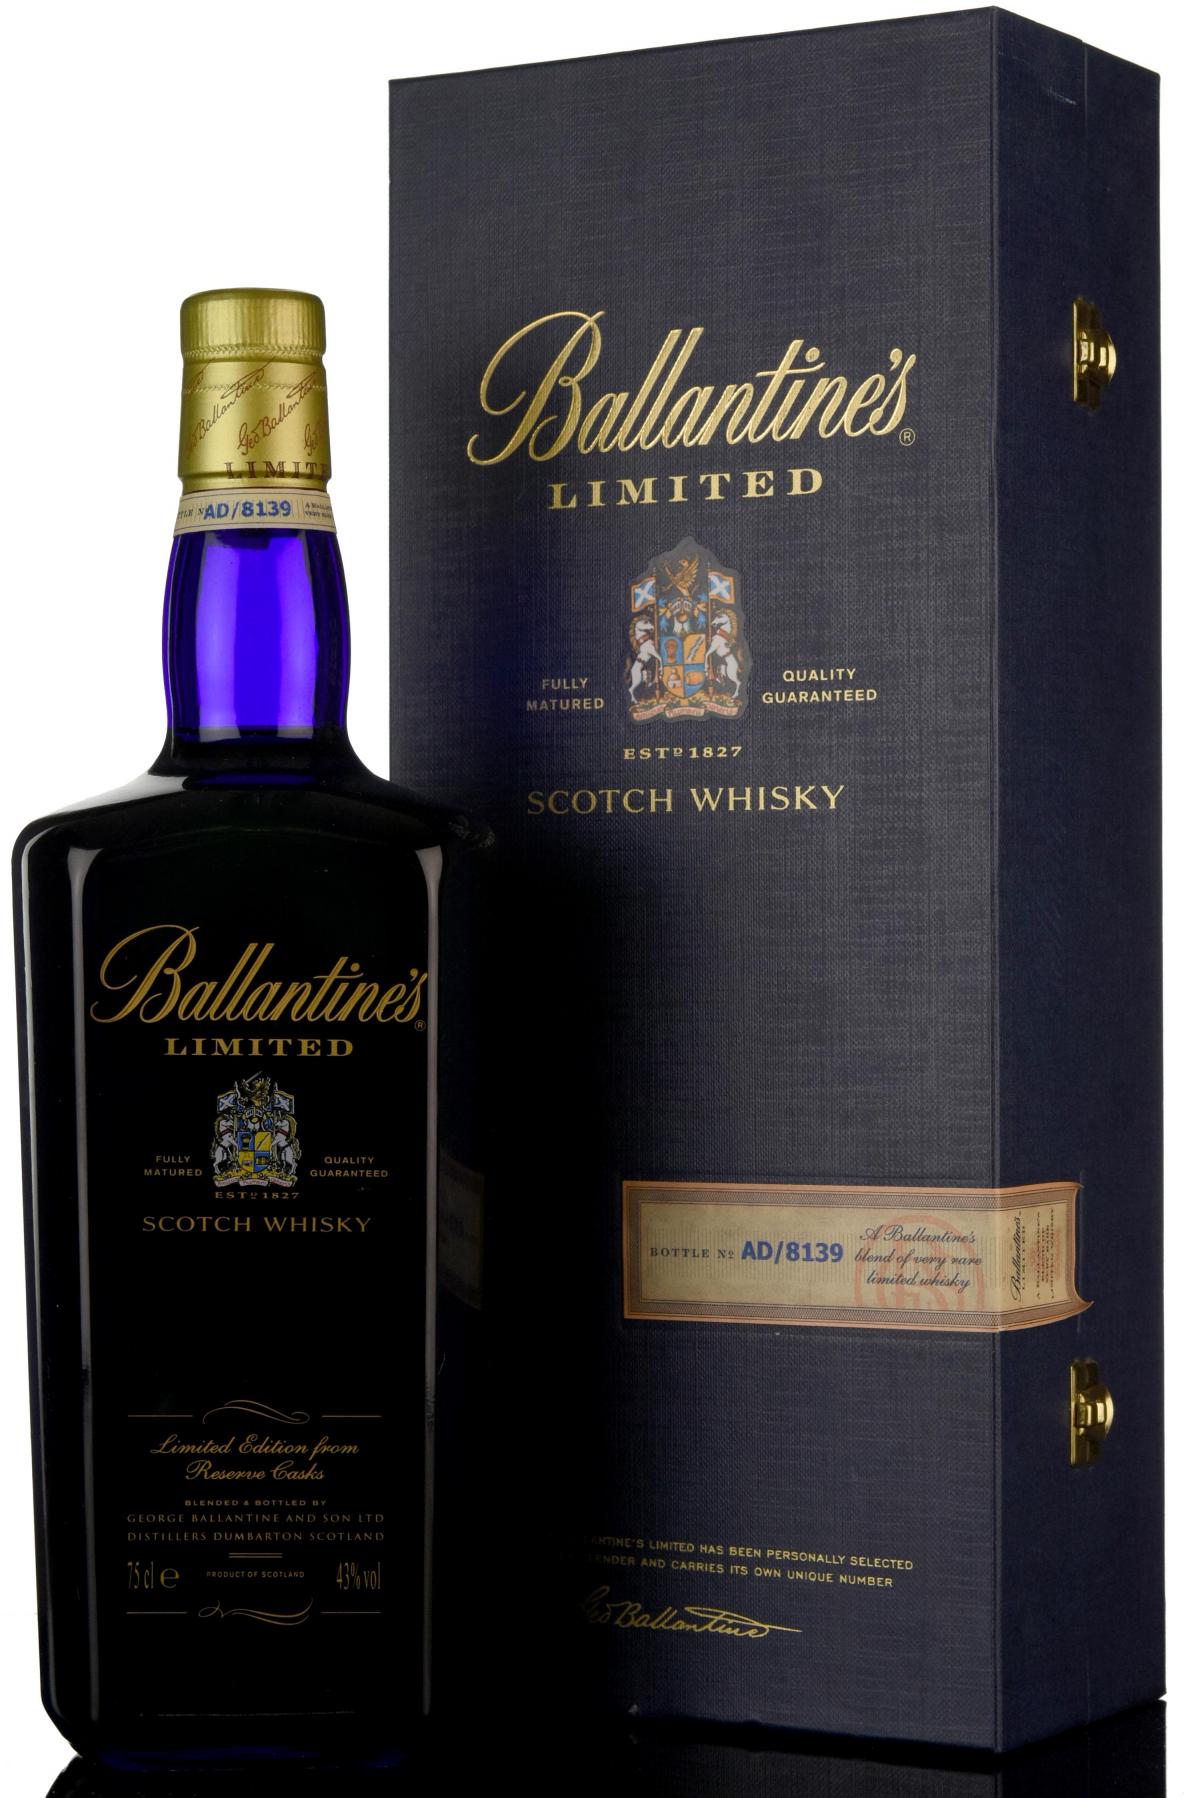 Ballantines Limited